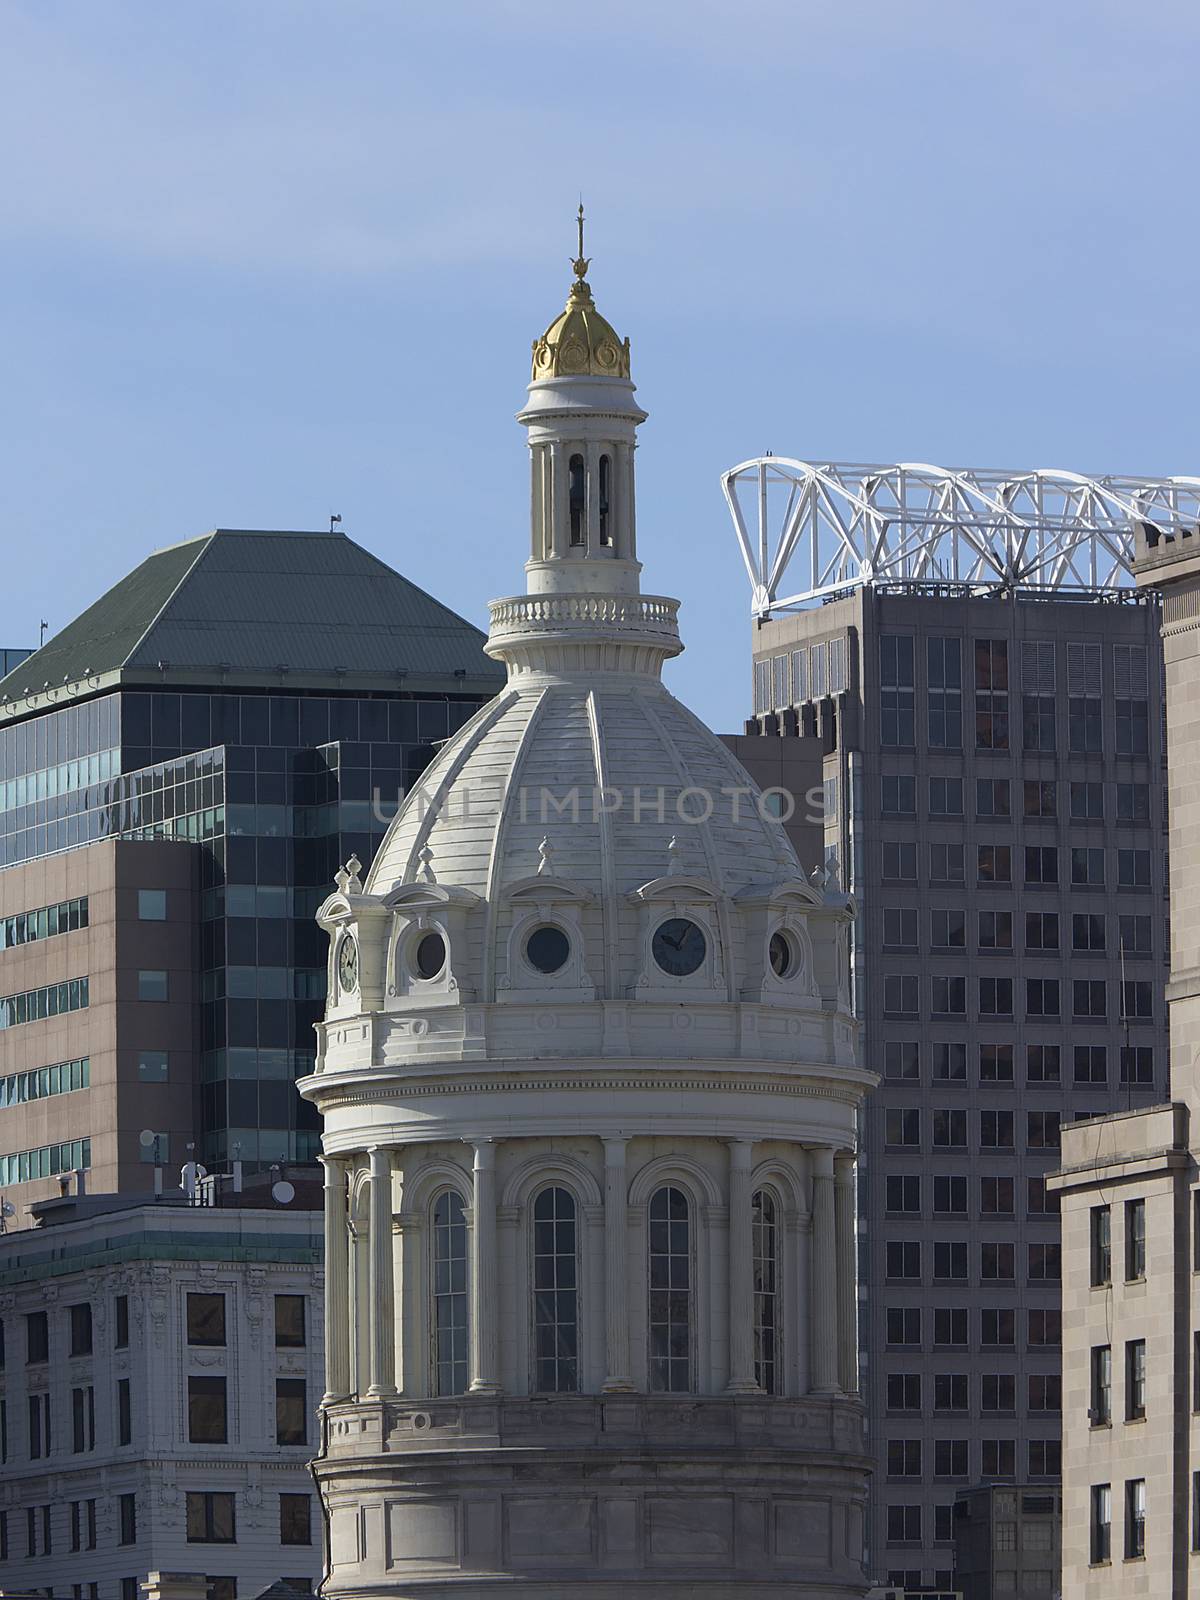 Baltimore skyline with City Hall dome